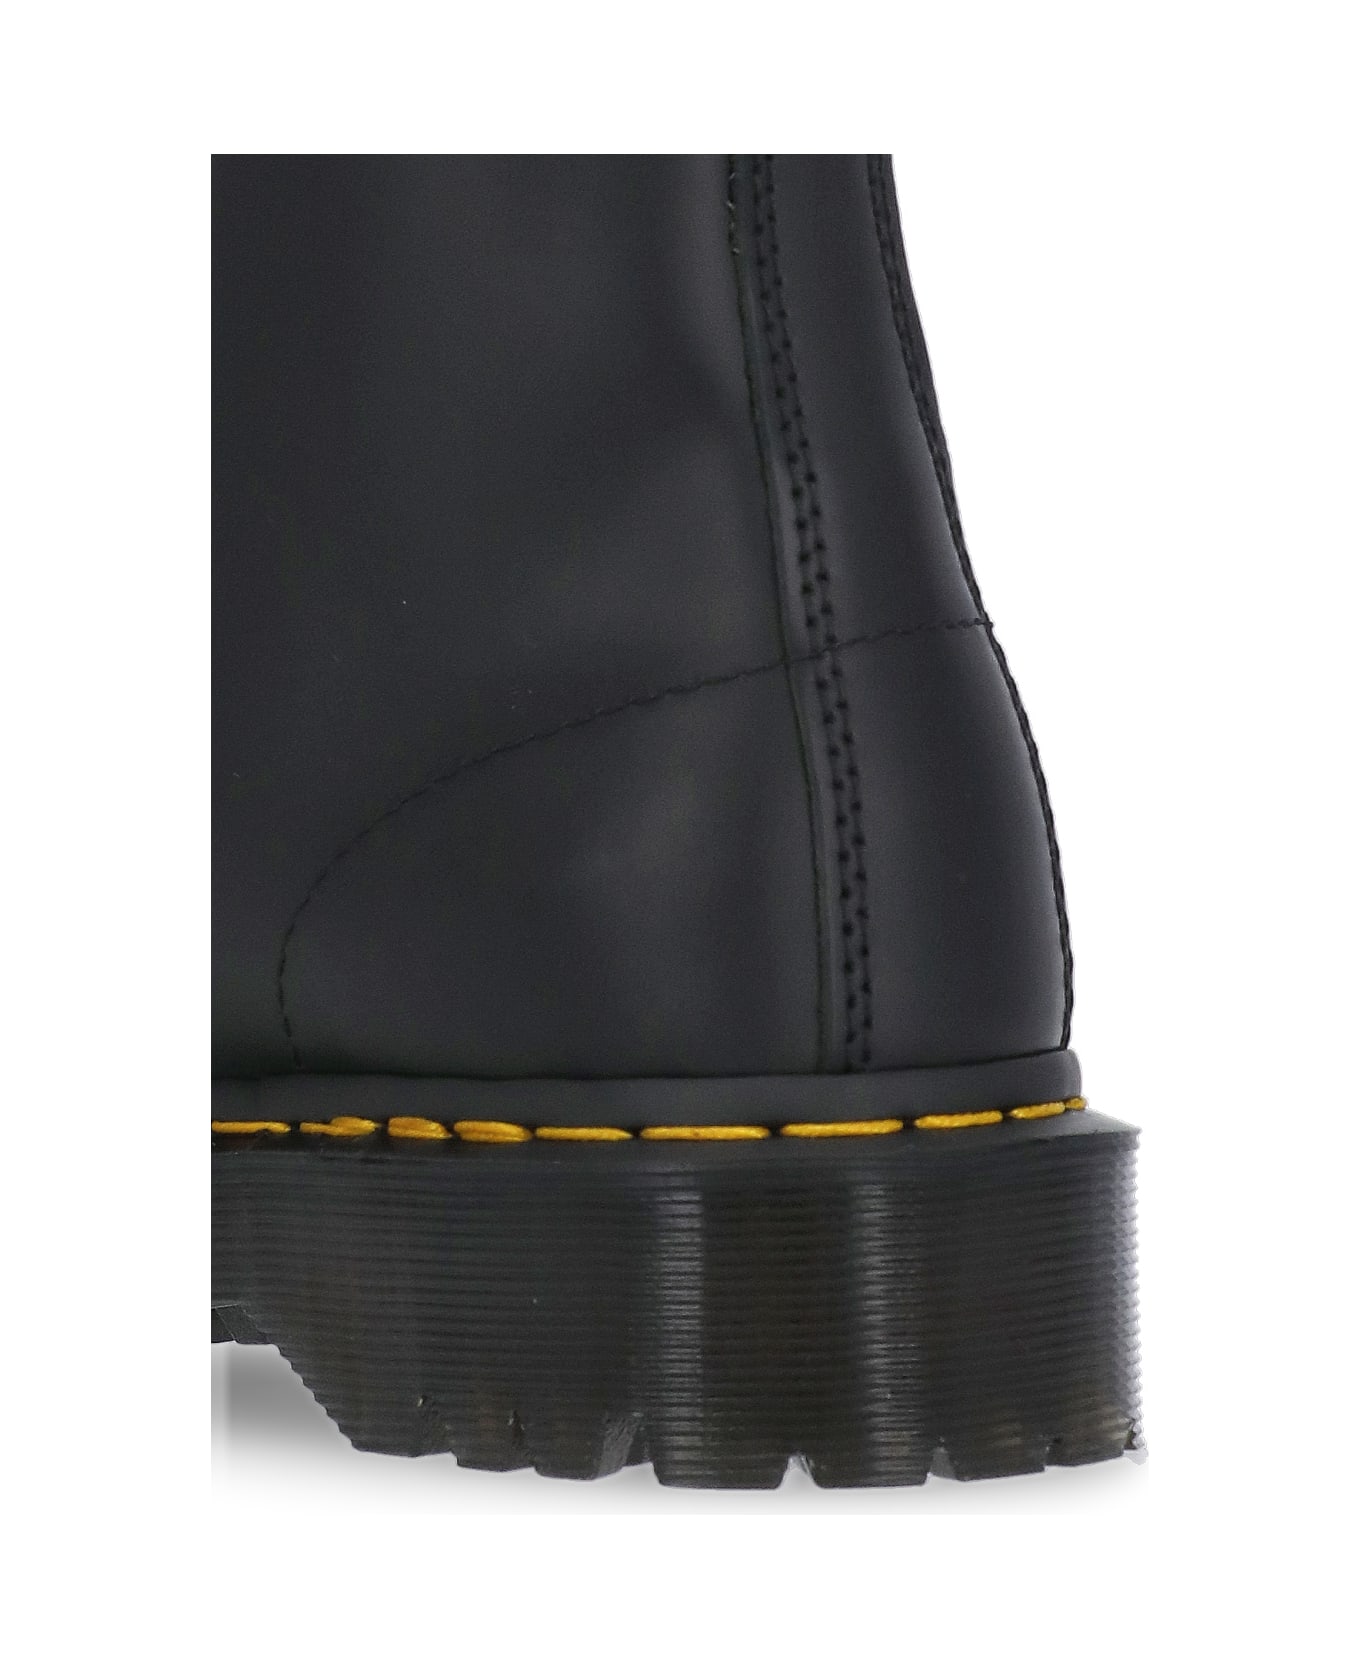 Dr. Martens 1460 Bex Boots - Black